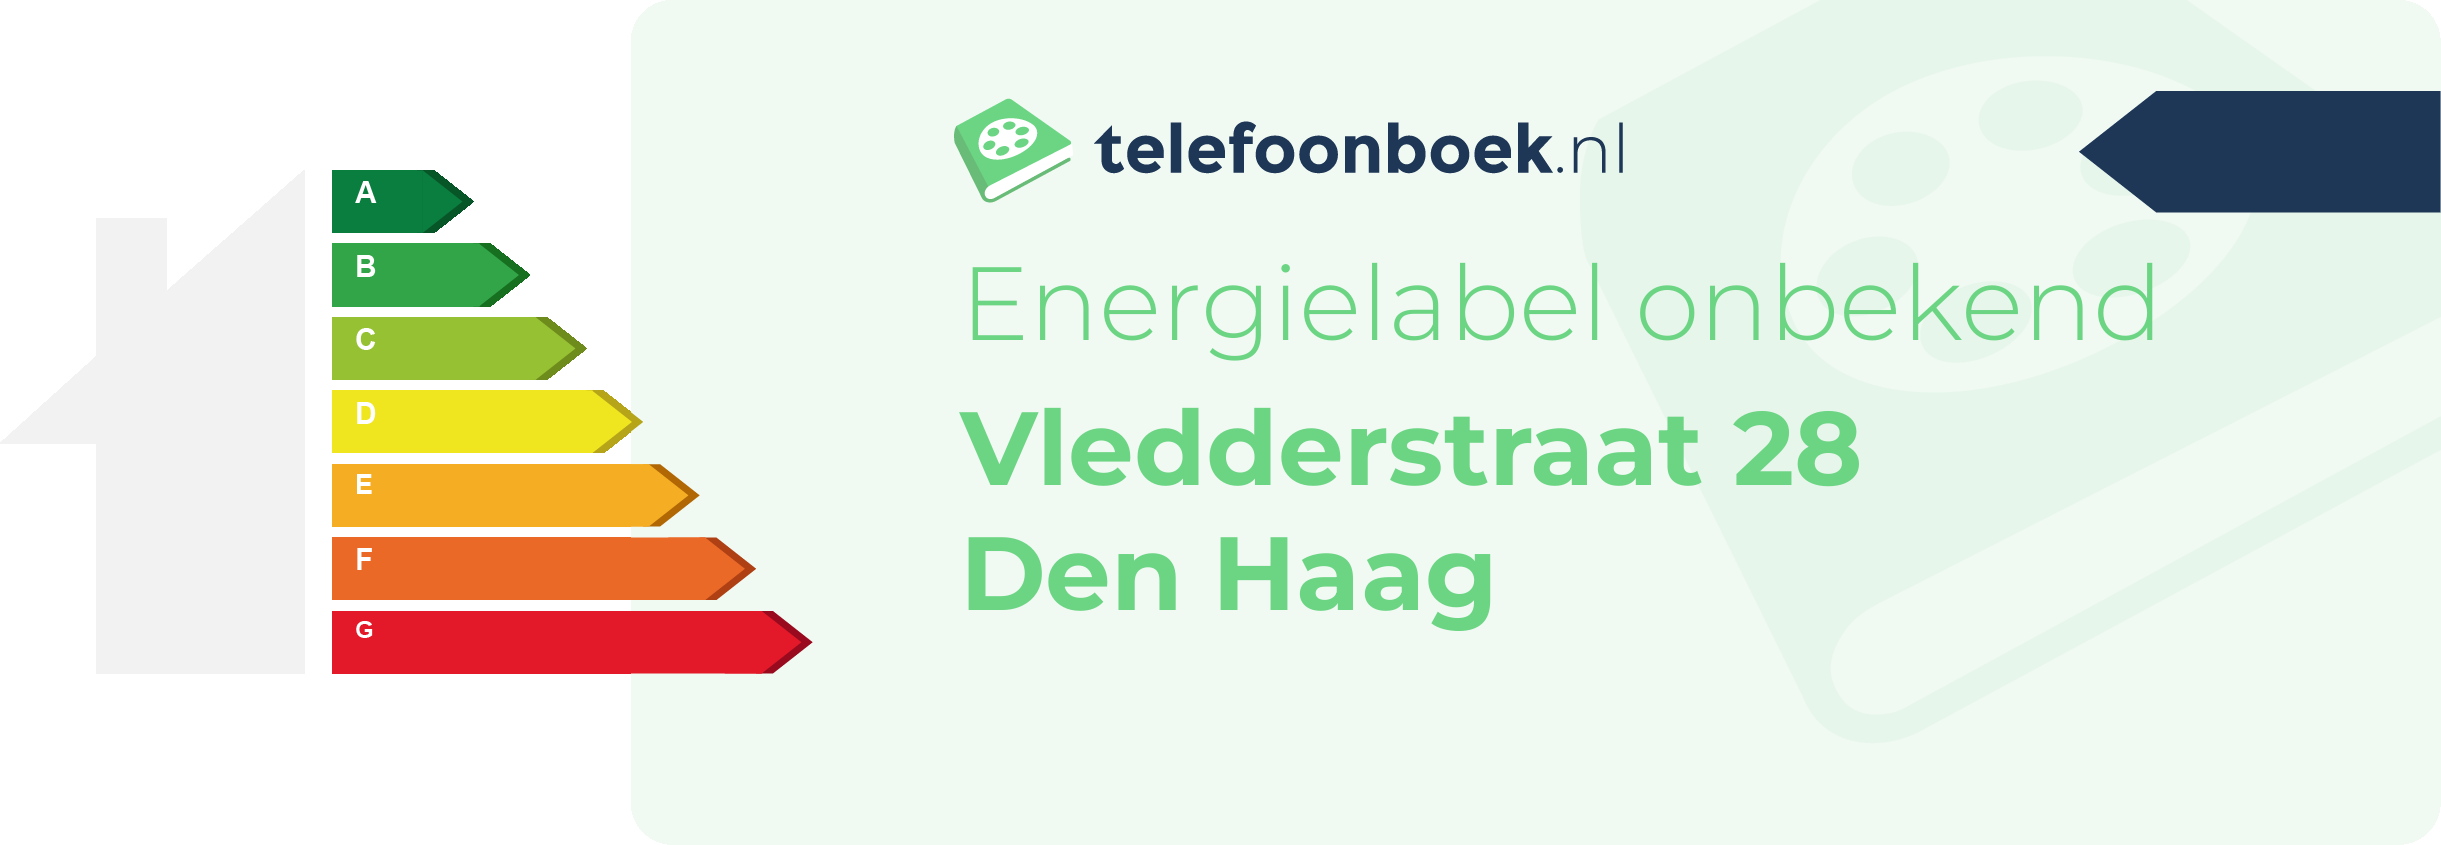 Energielabel Vledderstraat 28 Den Haag